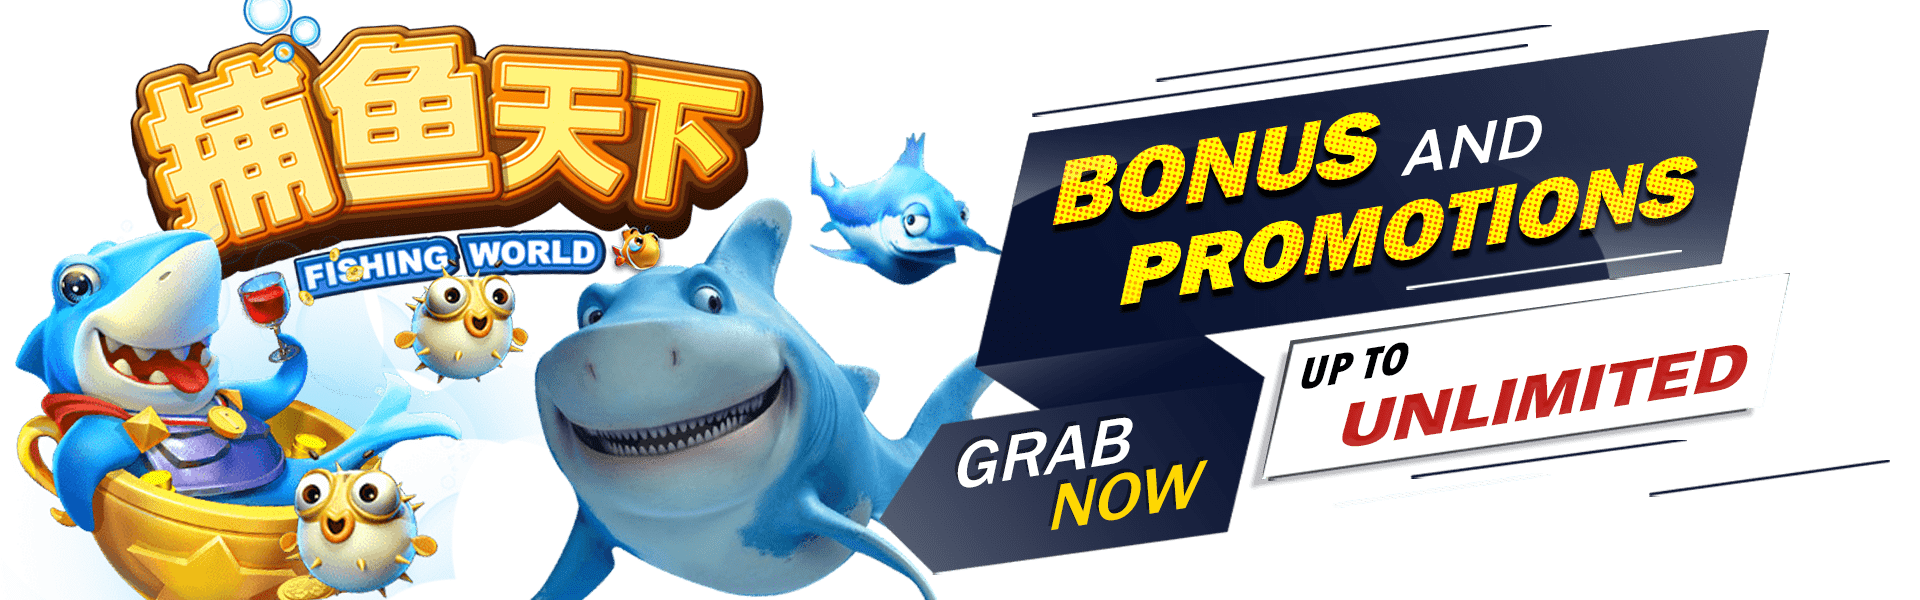 fishing world bonus and promotion banner